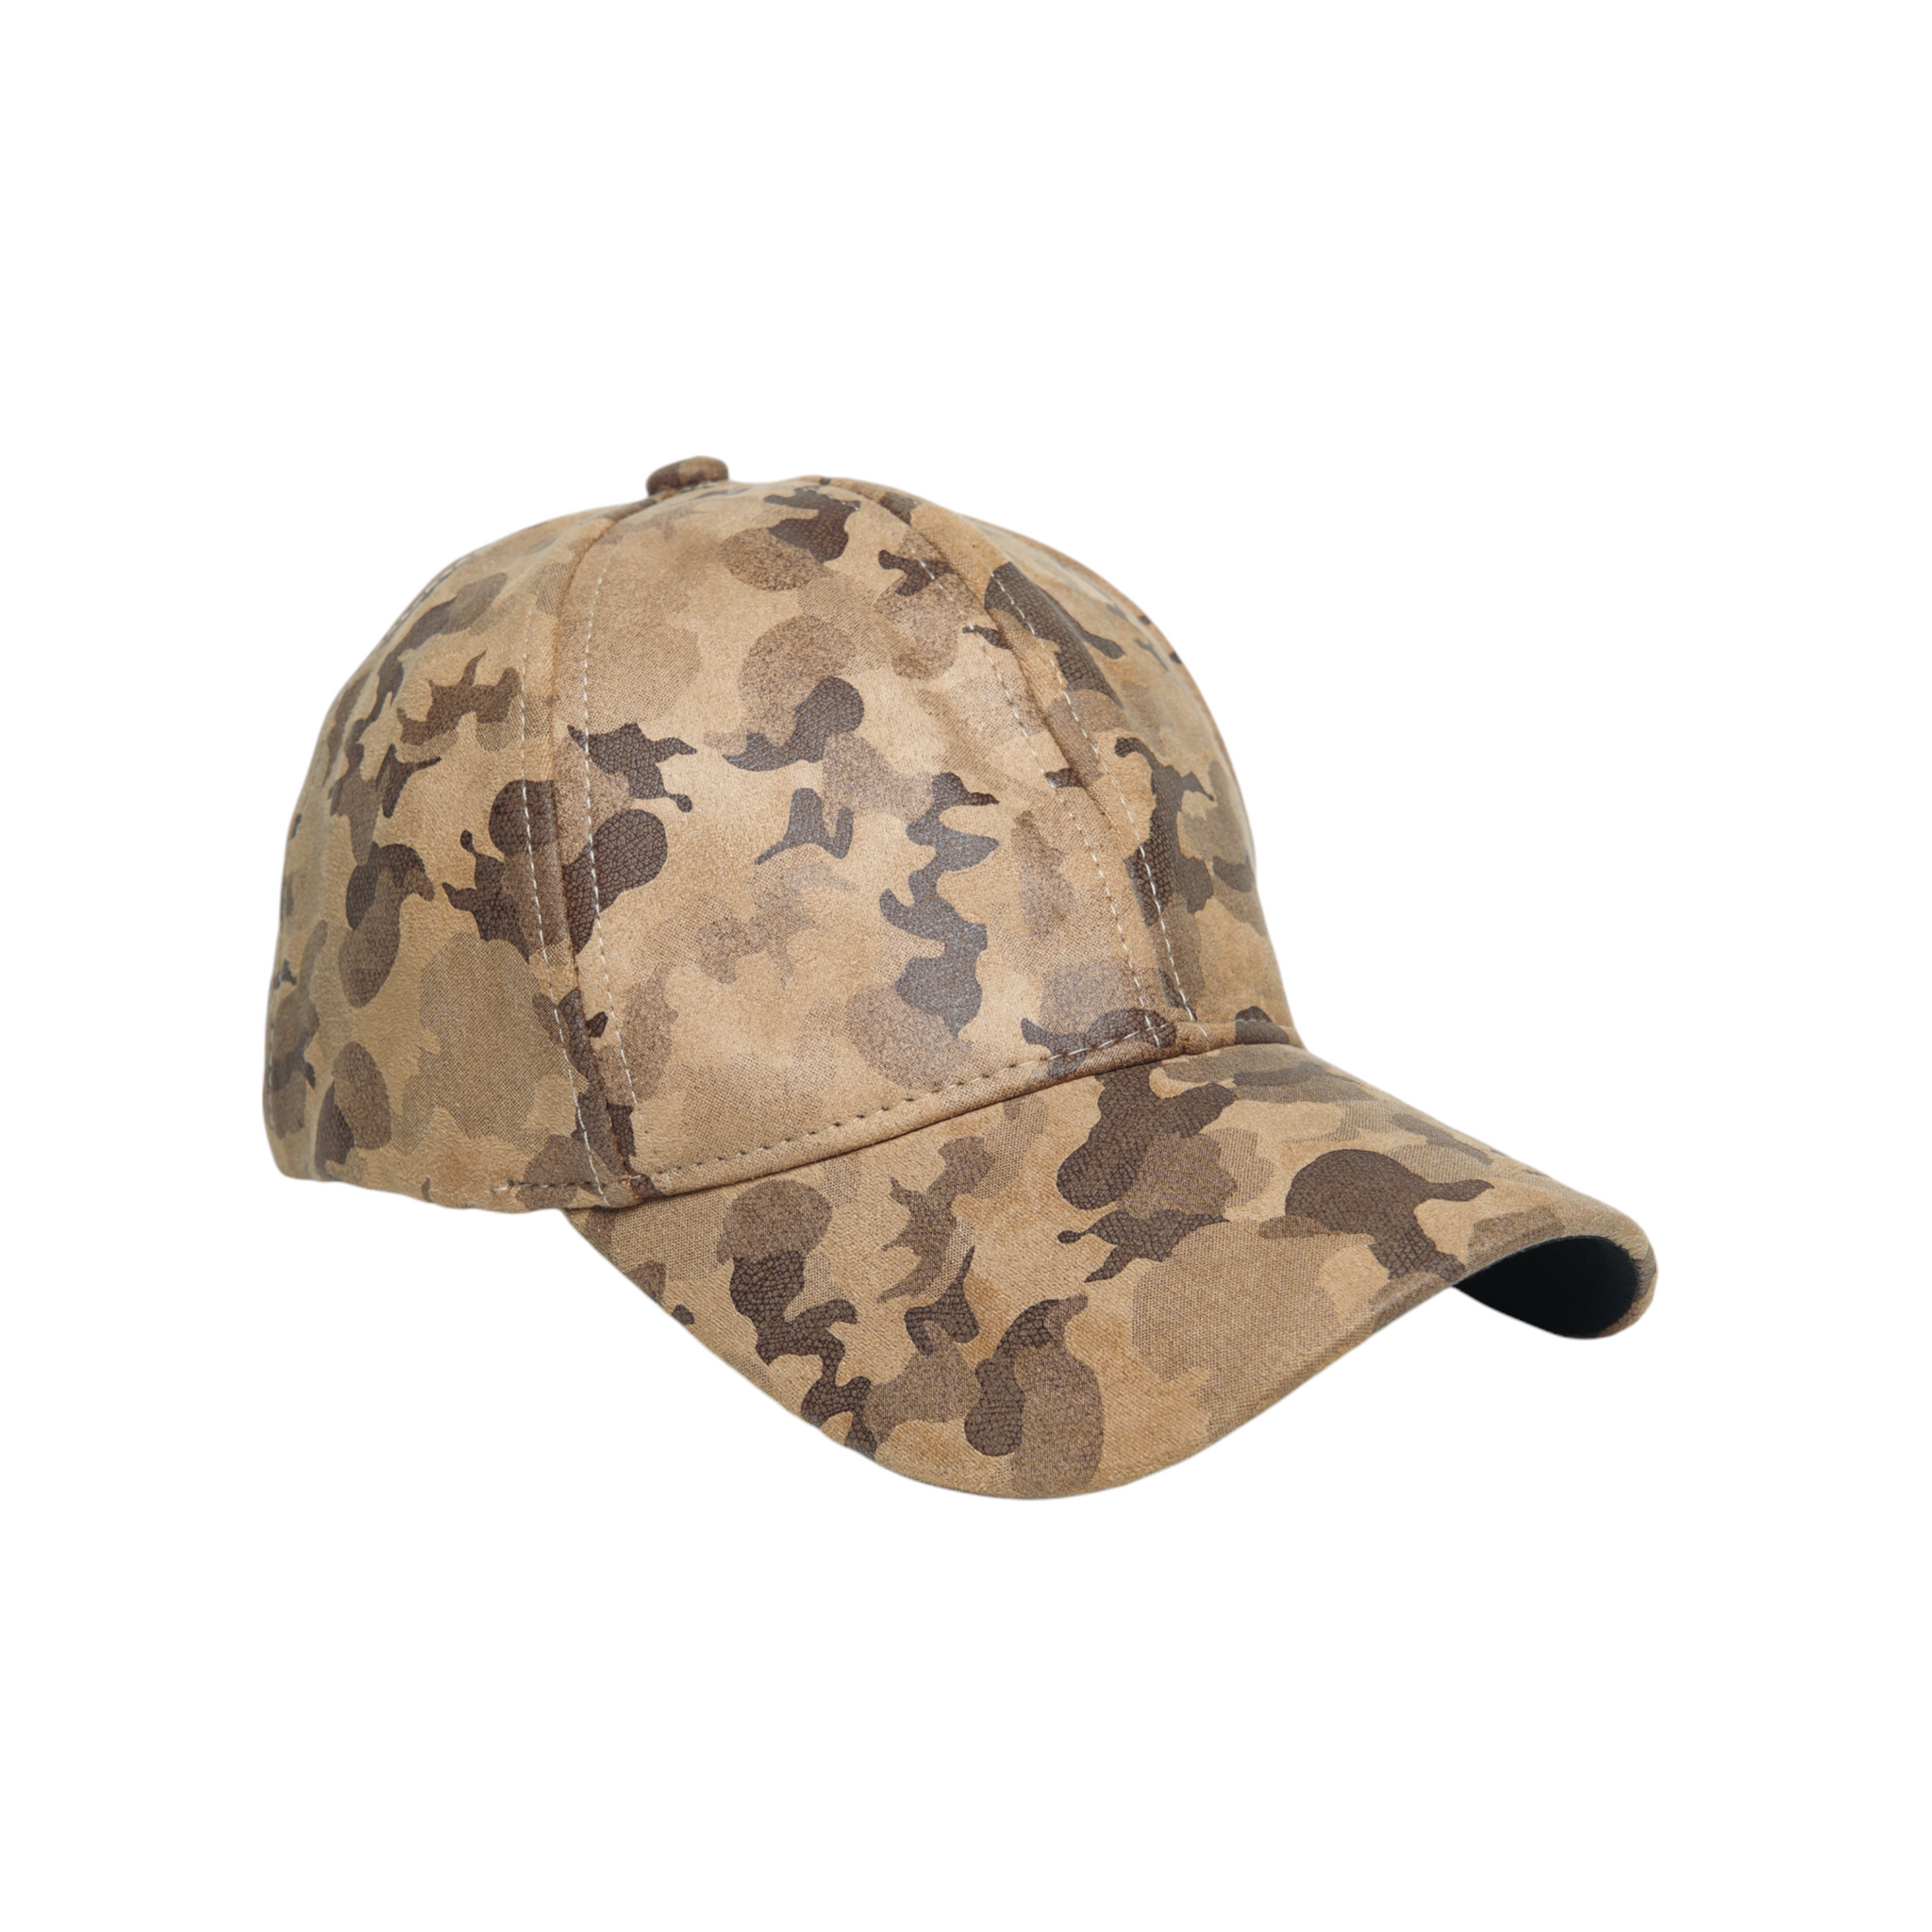 Chokore Suede Camouflage Curved Brim Baseball Cap (Light Brown)